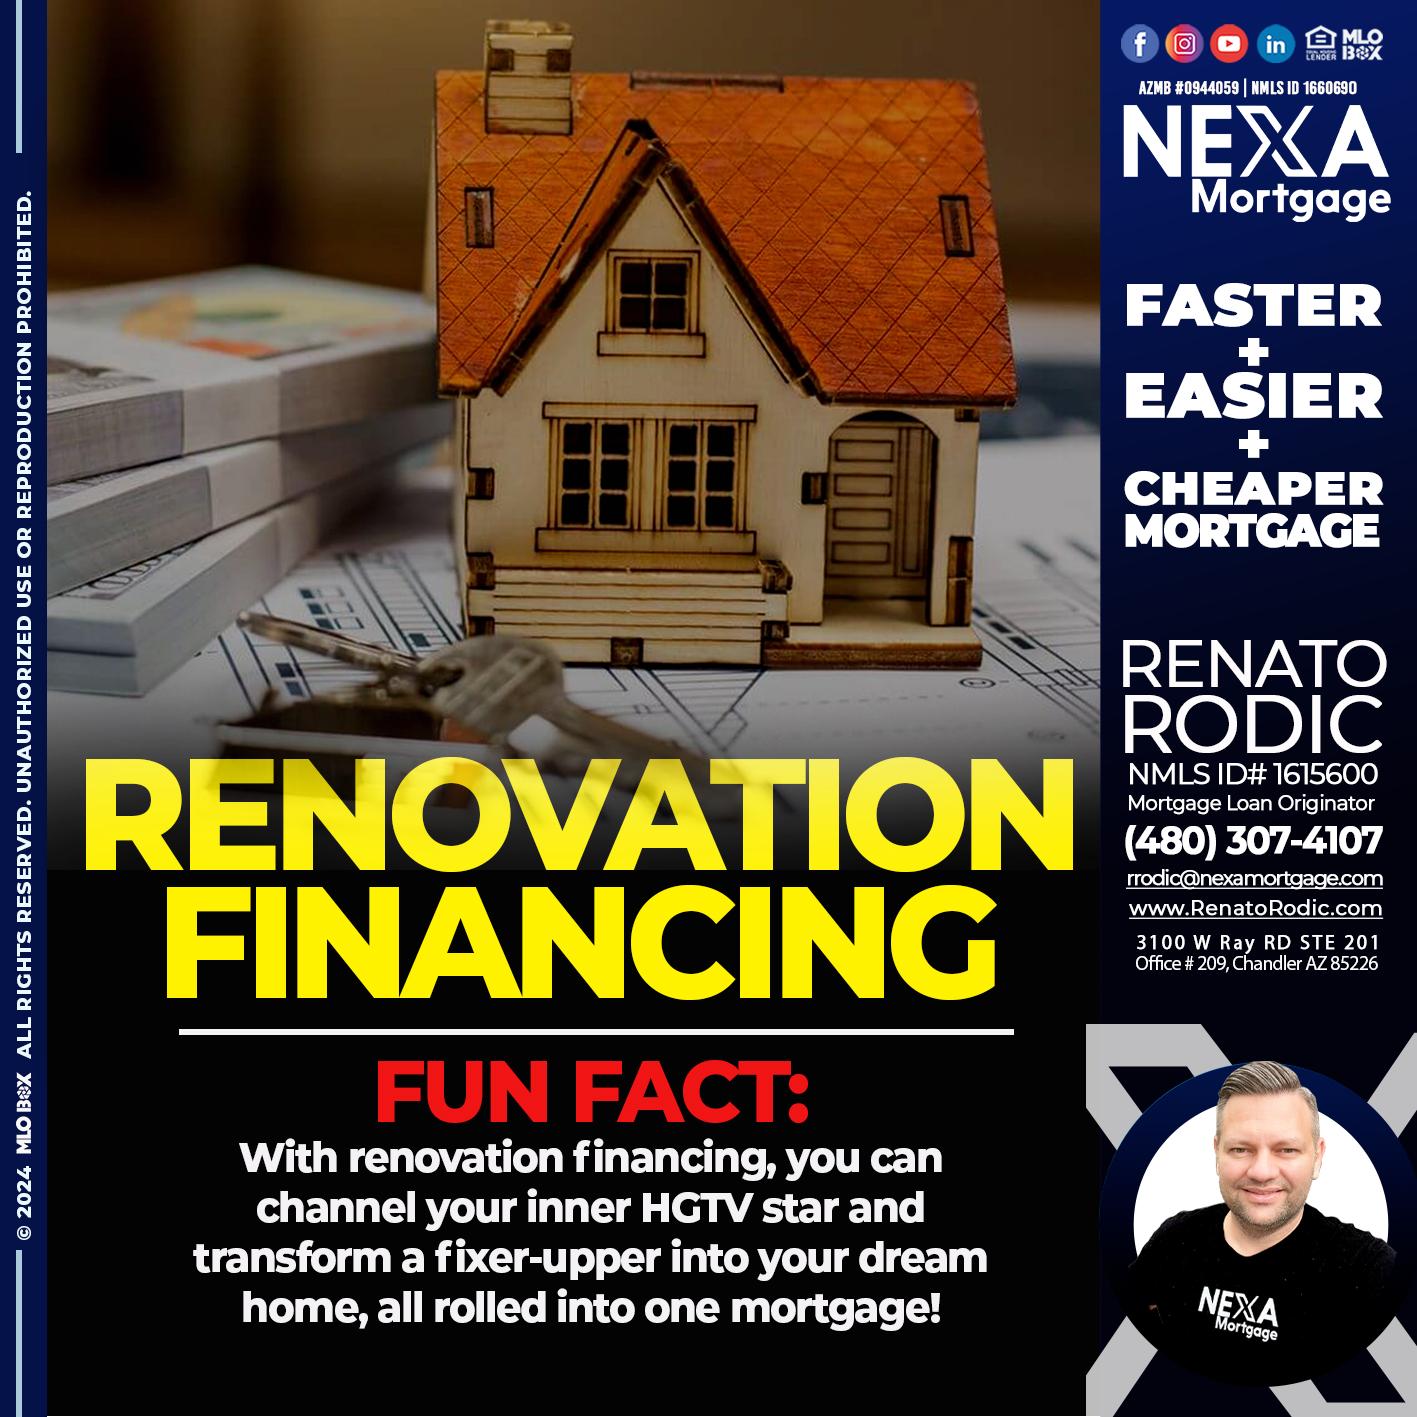 renovation loans - Renato Rodic -Mortgage Loan Originator